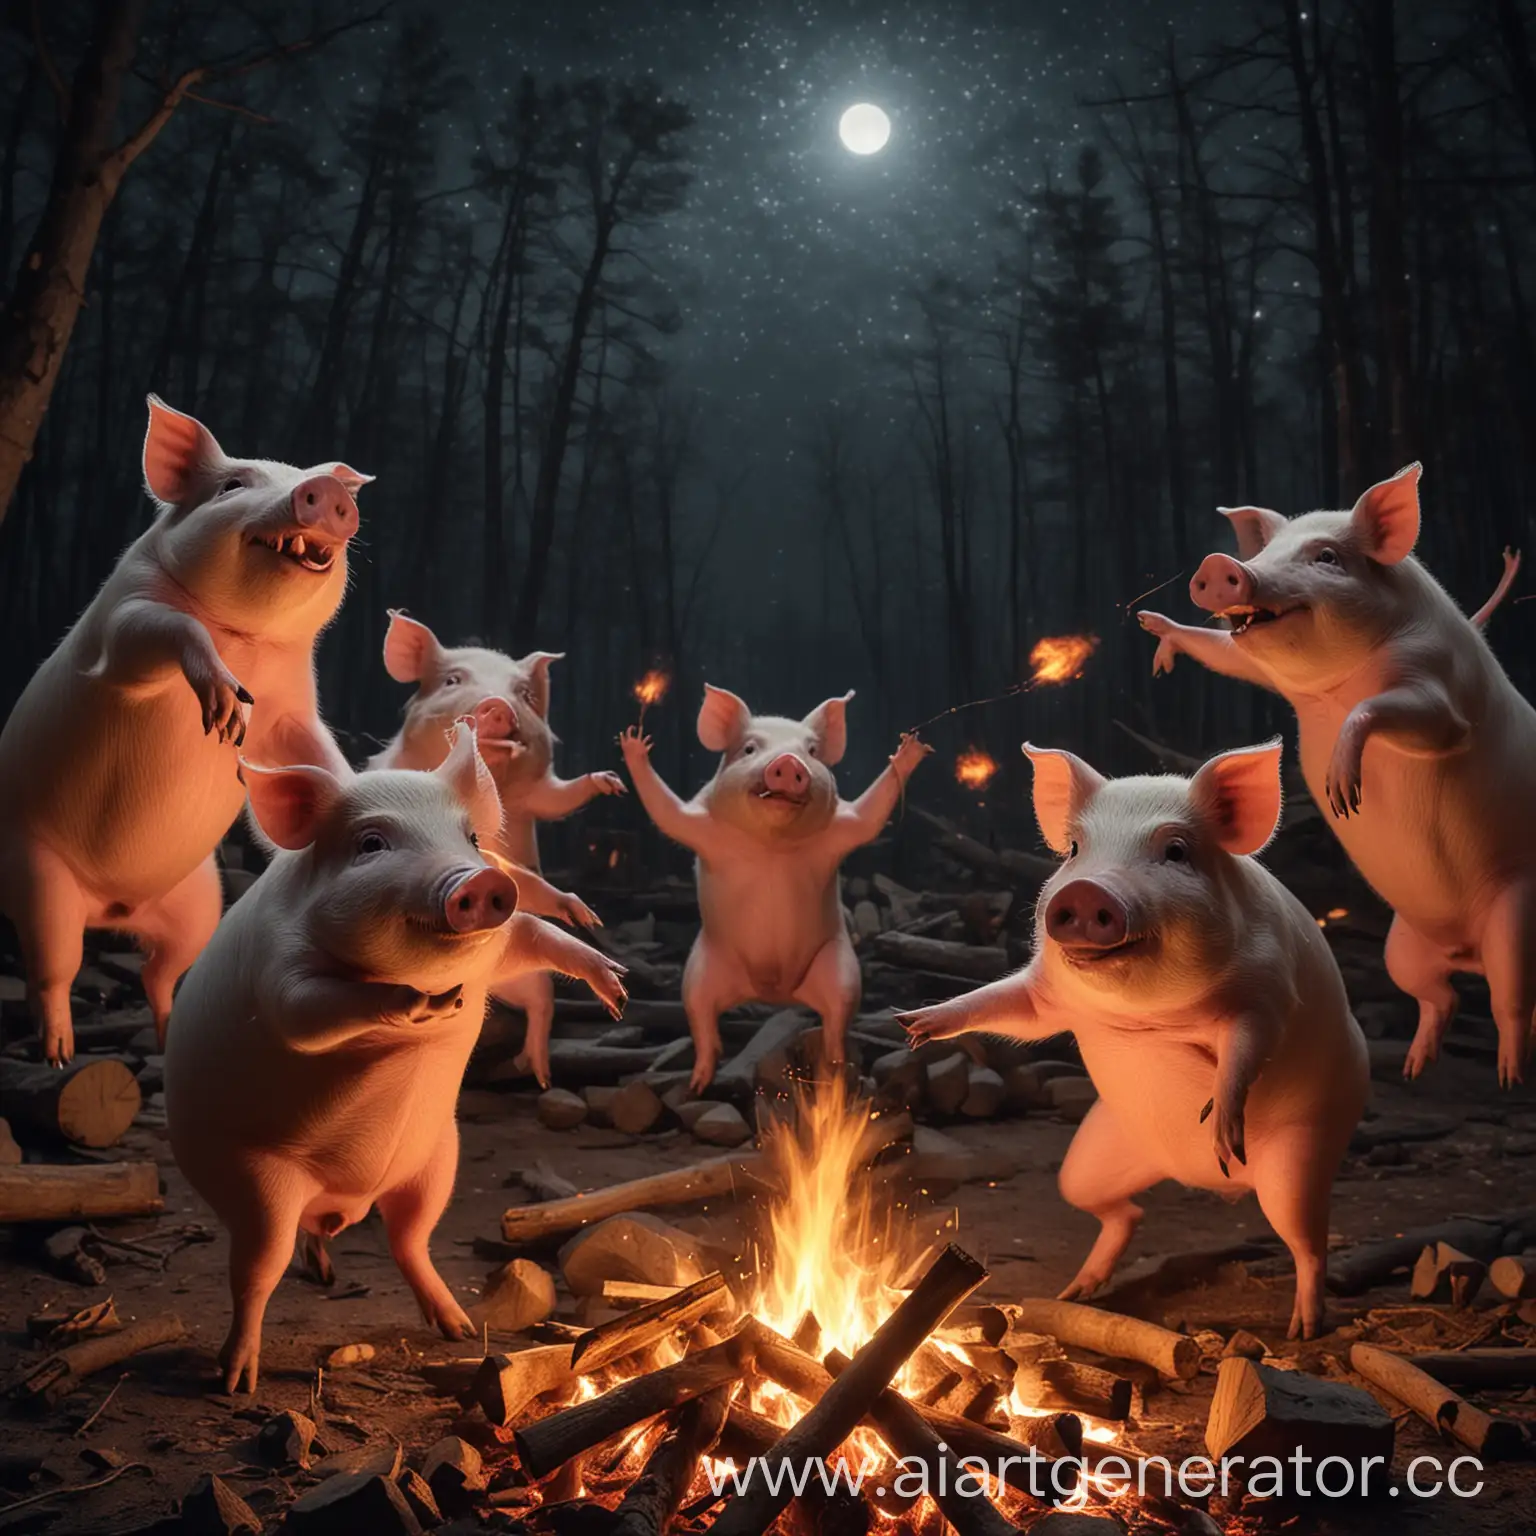 Malicious-Pigs-Dancing-Around-Campfire-at-Night